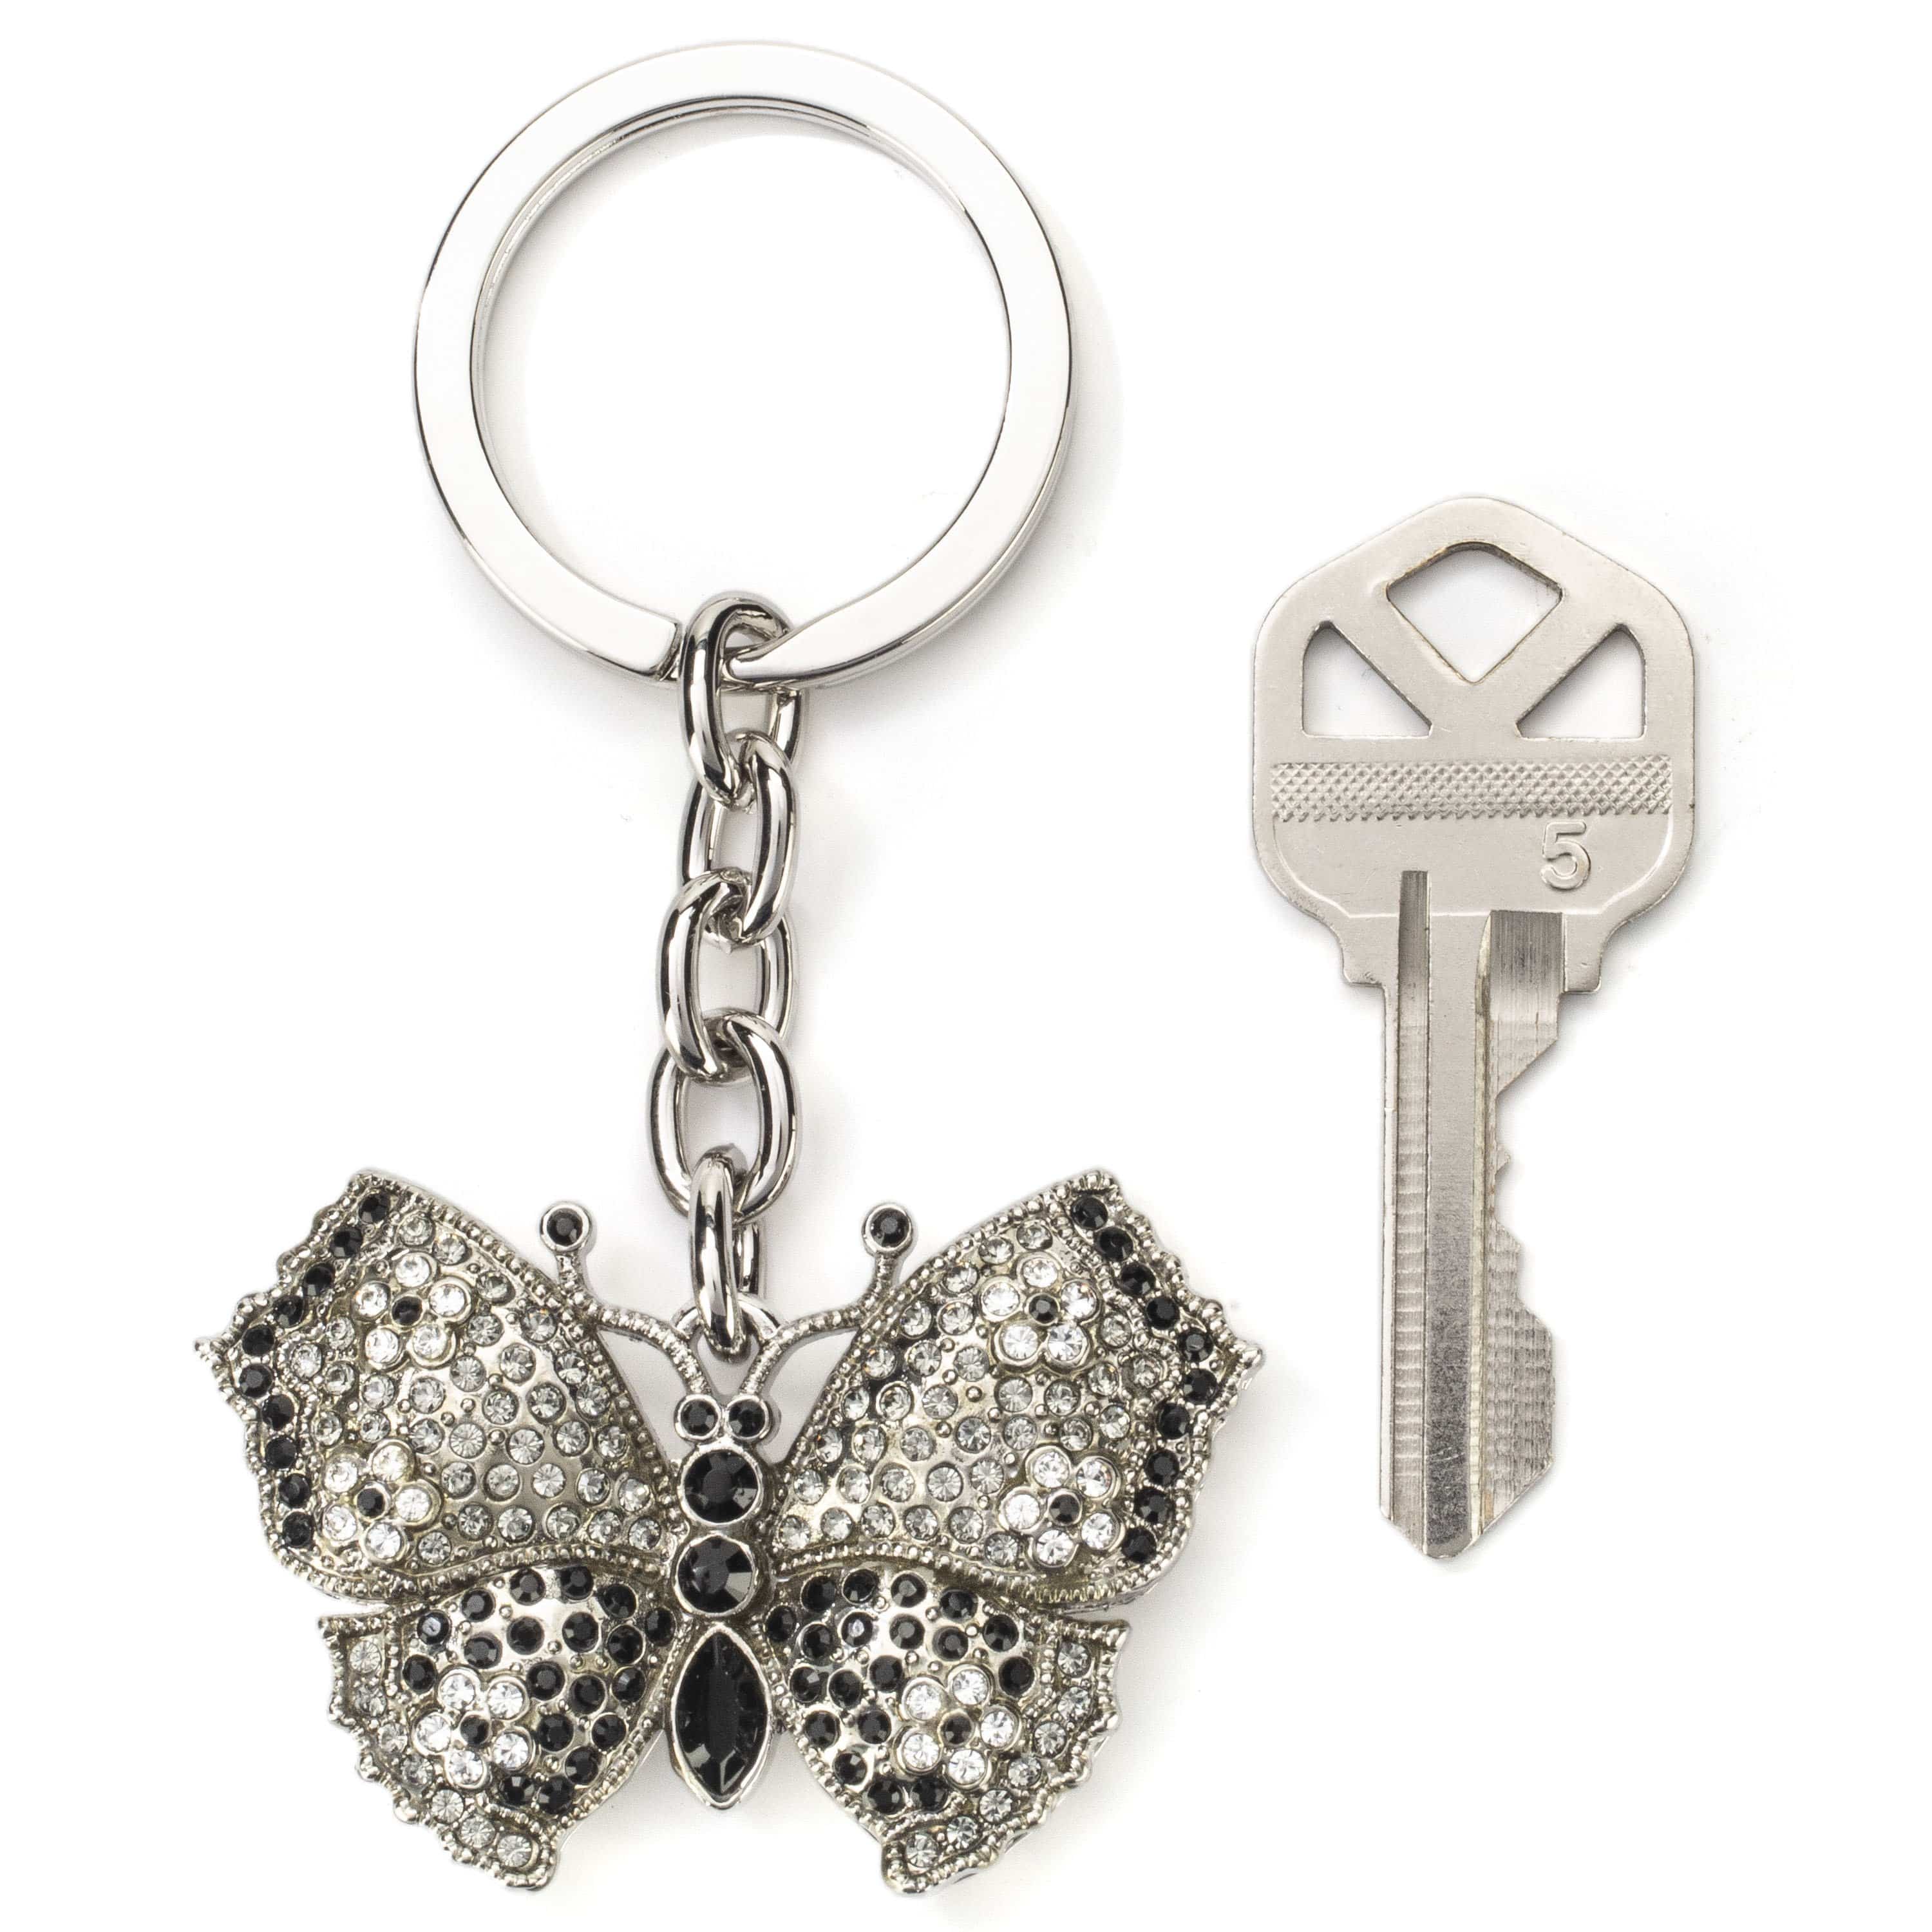 Kalifano Crystal Keychains Black Diamond Butterfly Keychain made with Swarovski Crystals SKC-004